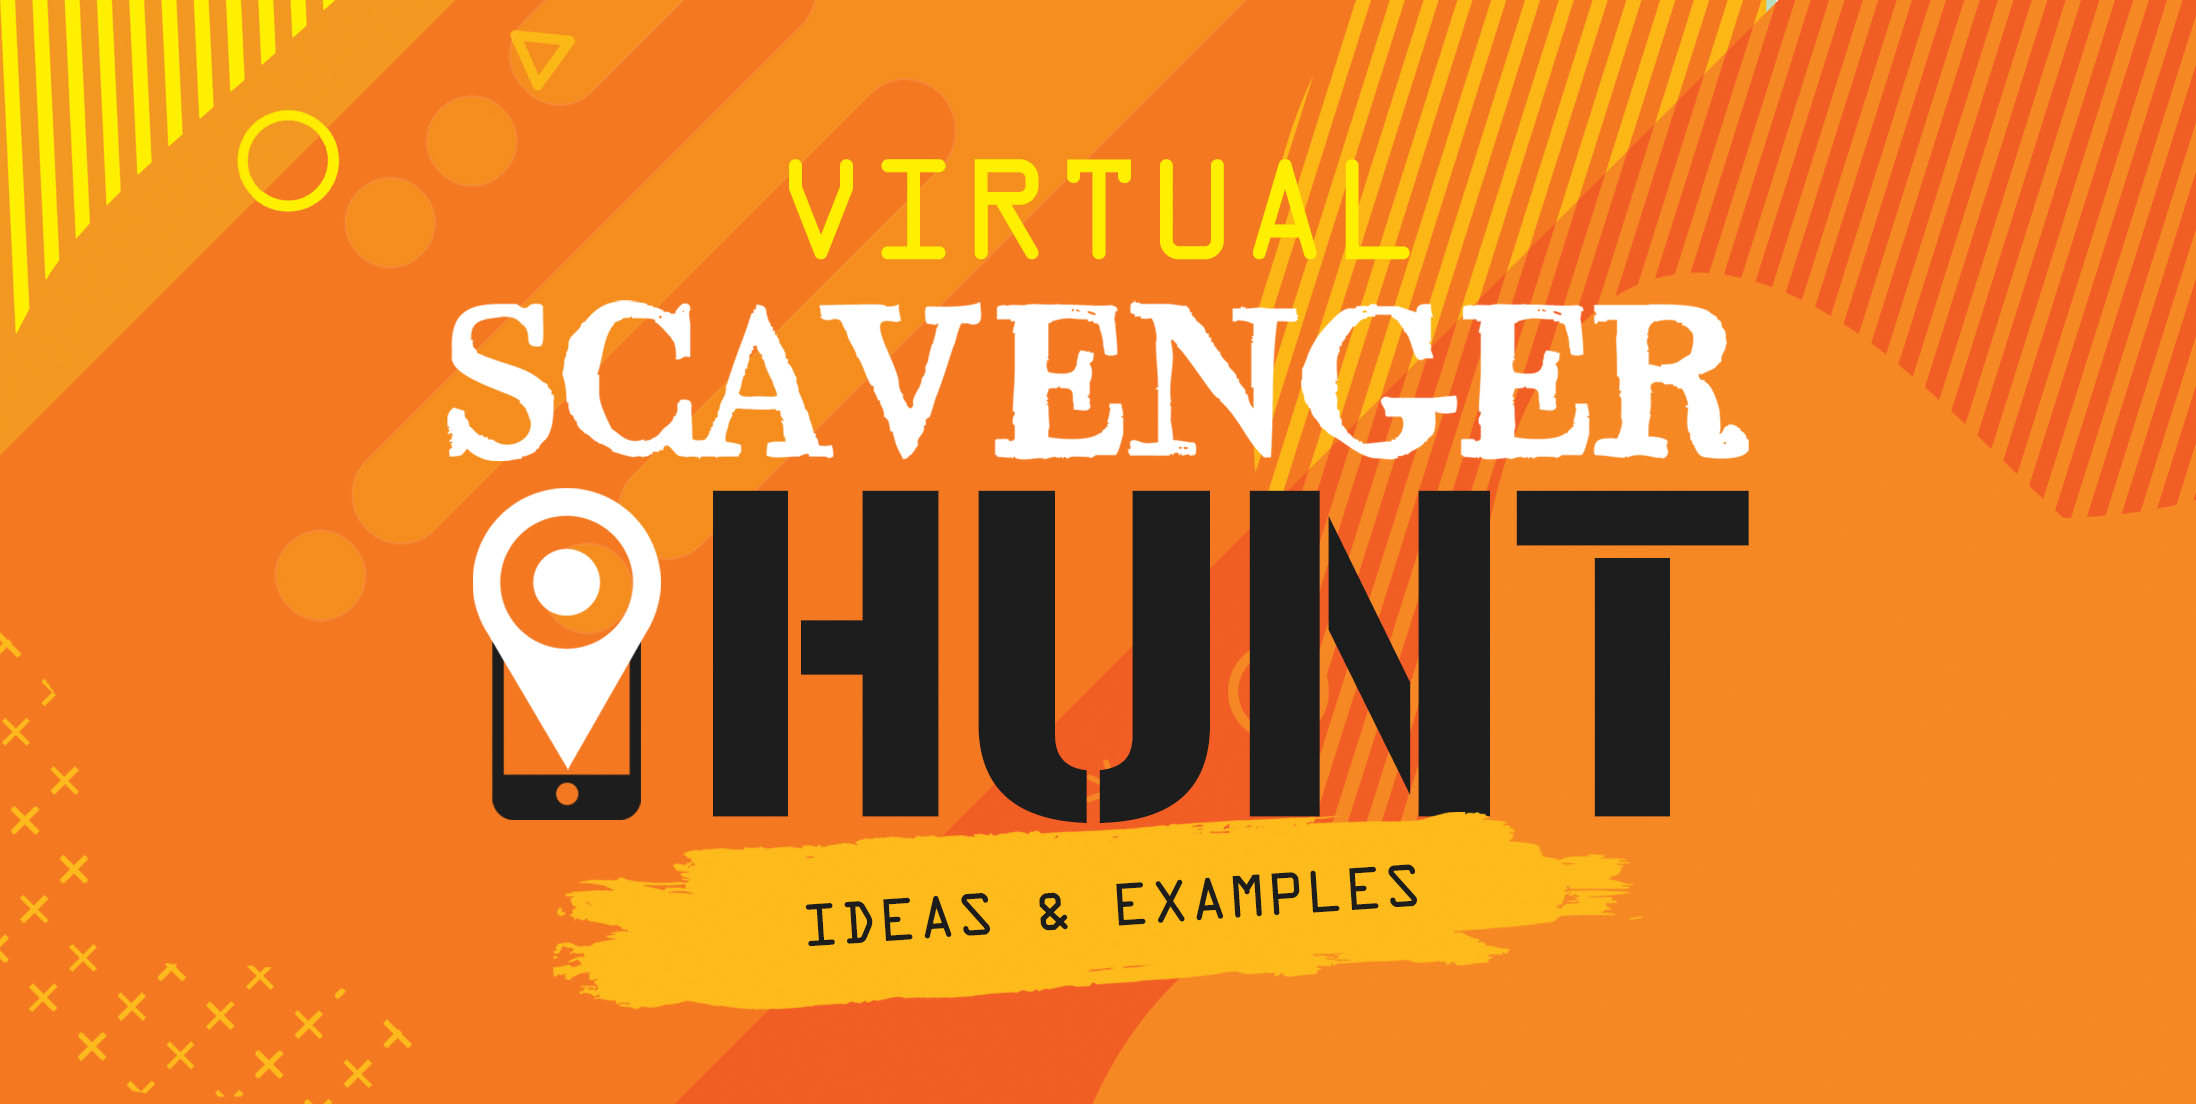 Virtual Scavenger Hunt Ideas & Examples